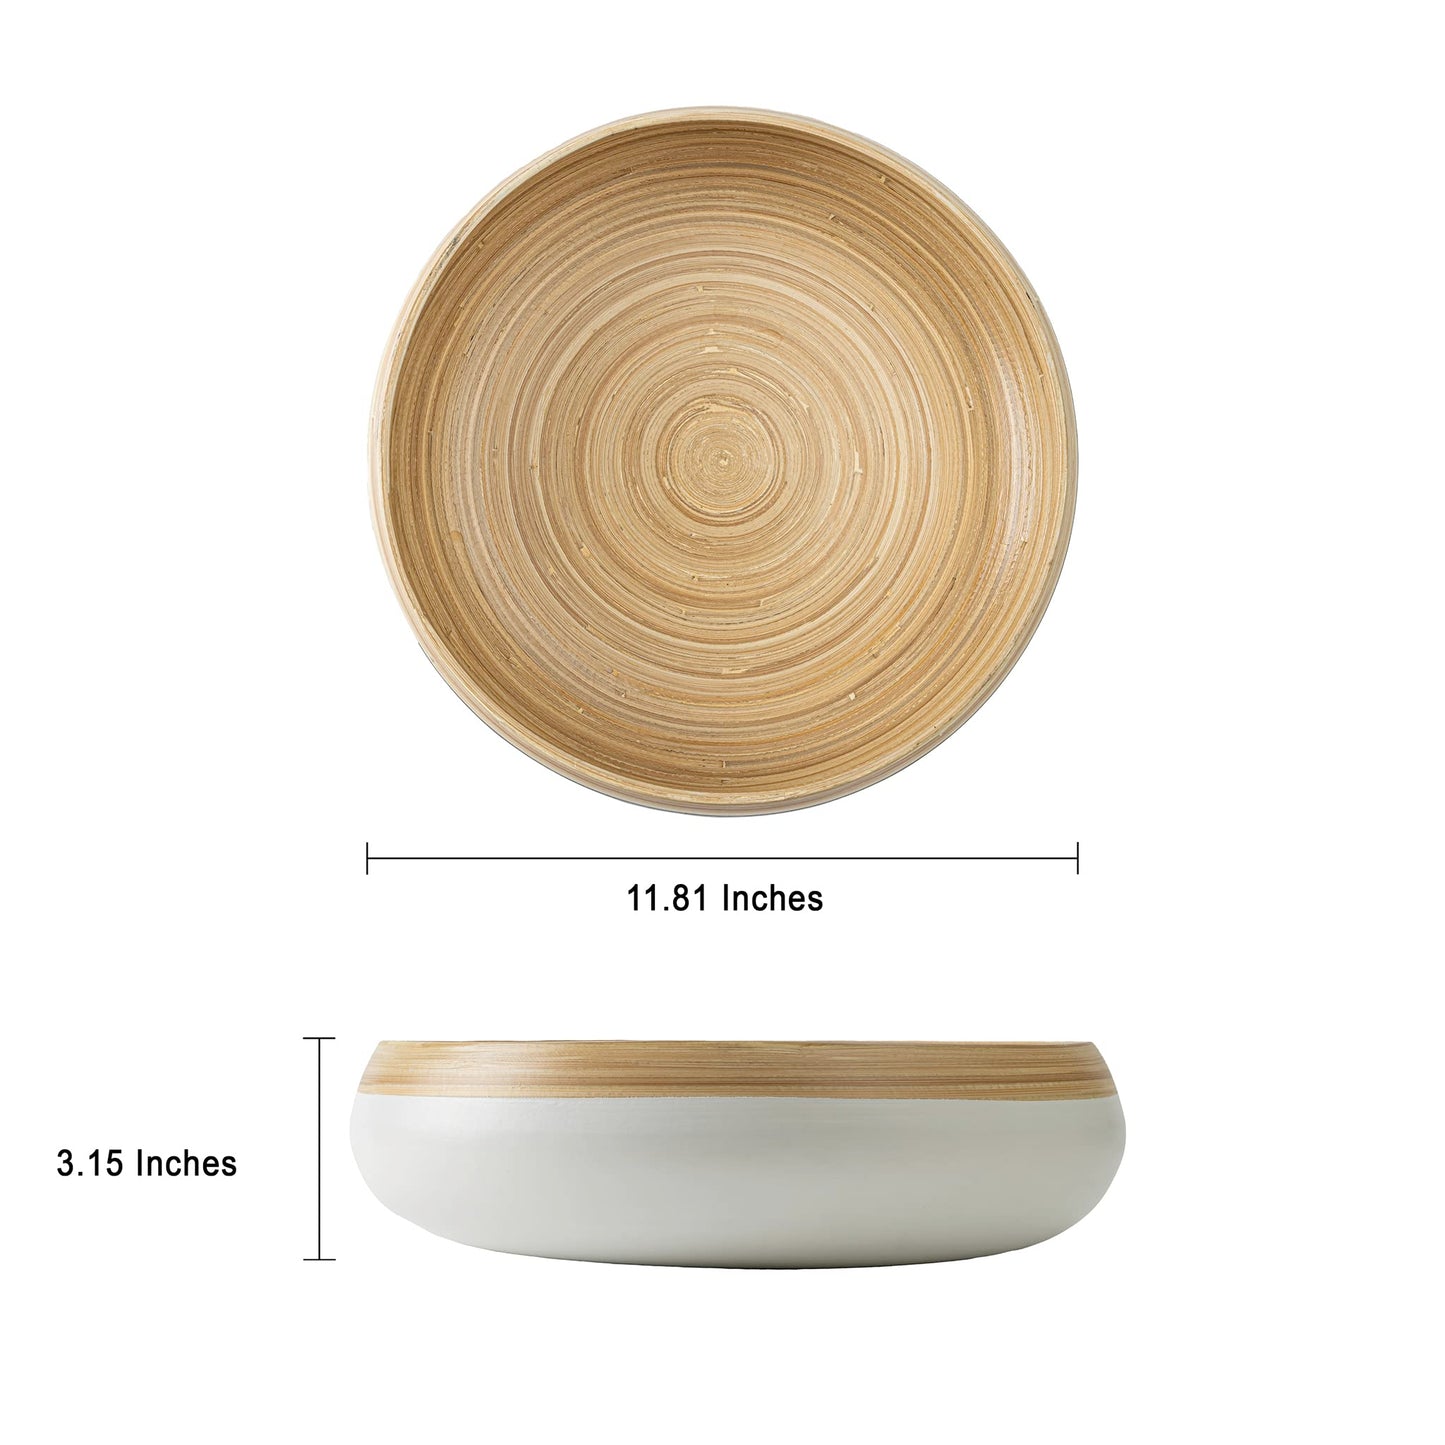 Kiwi Homie 11.81" Spun Bamboo Fruit Bowl, Bamboo Salad Bowl, Modern Large Serving Bowl, Decorative Bowl for Kitchen, Party, BBQs, Natural Handicrafted Bamboo Bowl (White)